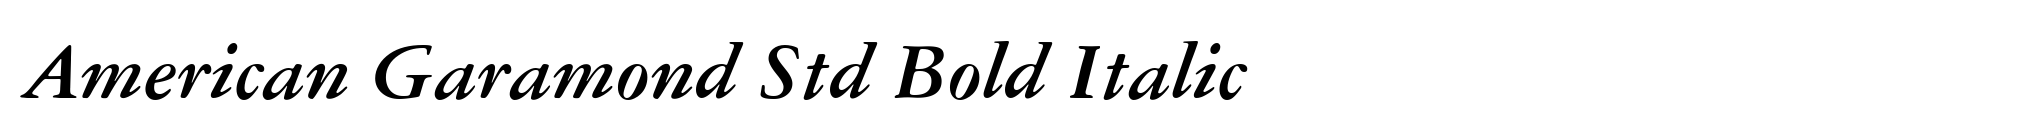 American Garamond Std Bold Italic image